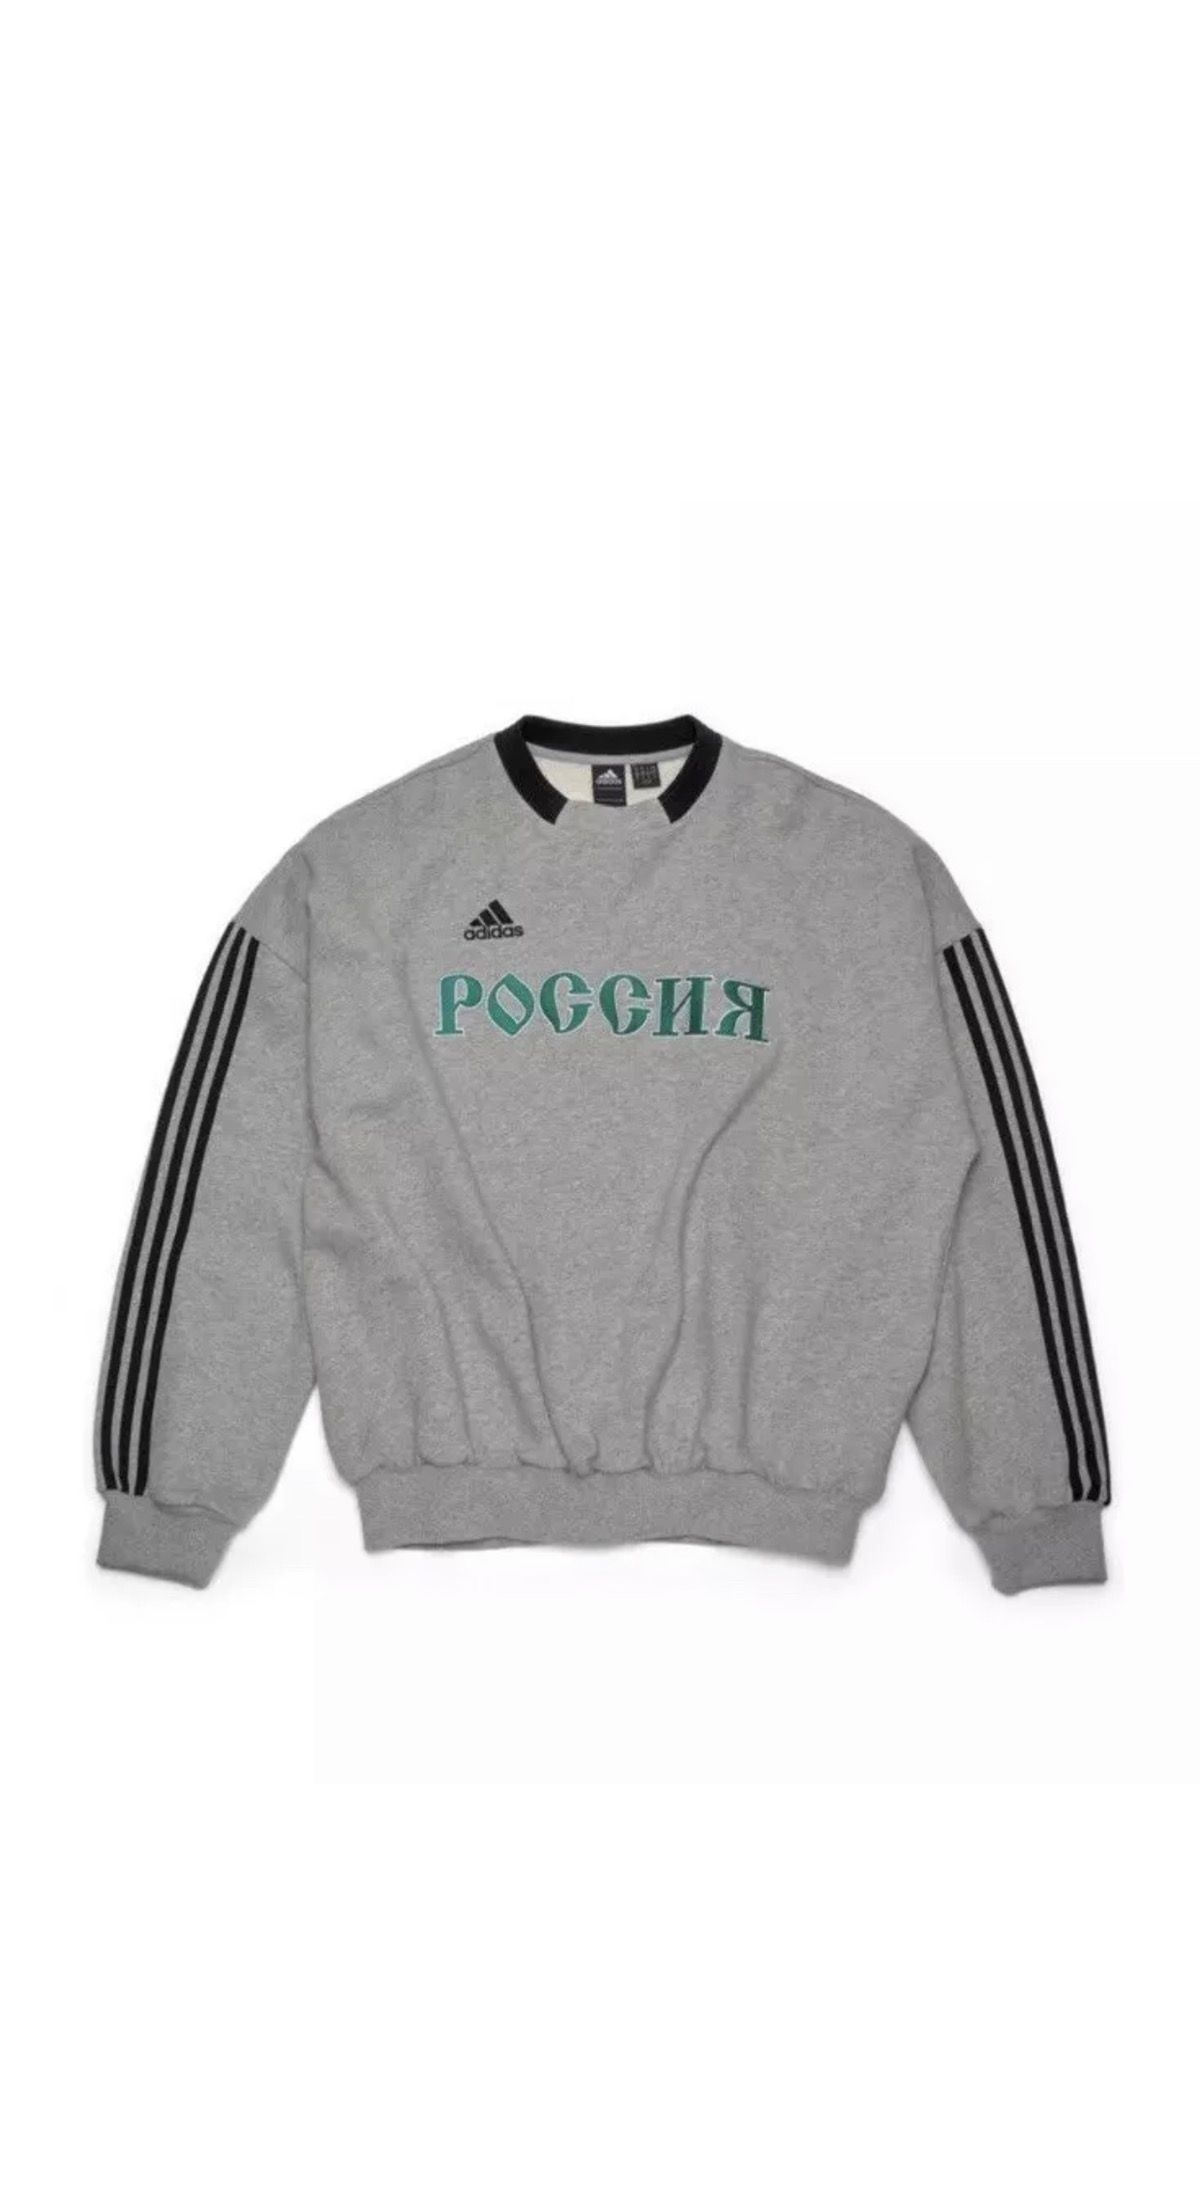 Adidas Russia Sweatshirt Size US L / EU 52-54 / 3 - 1 Preview